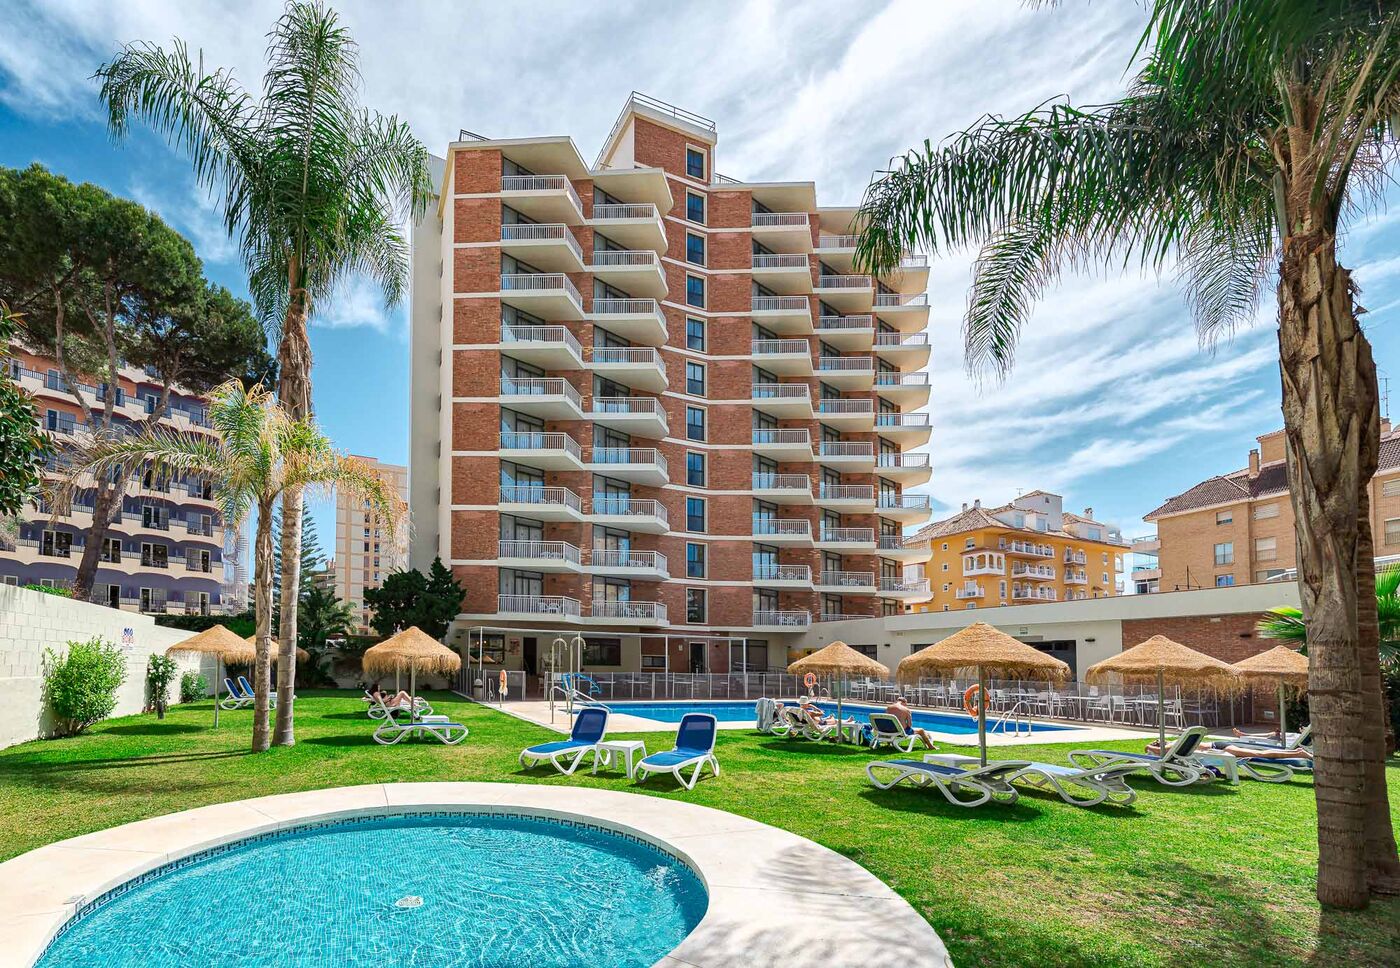 Banus Beach Apartments, Puerto Banus: the best offers with Destinia